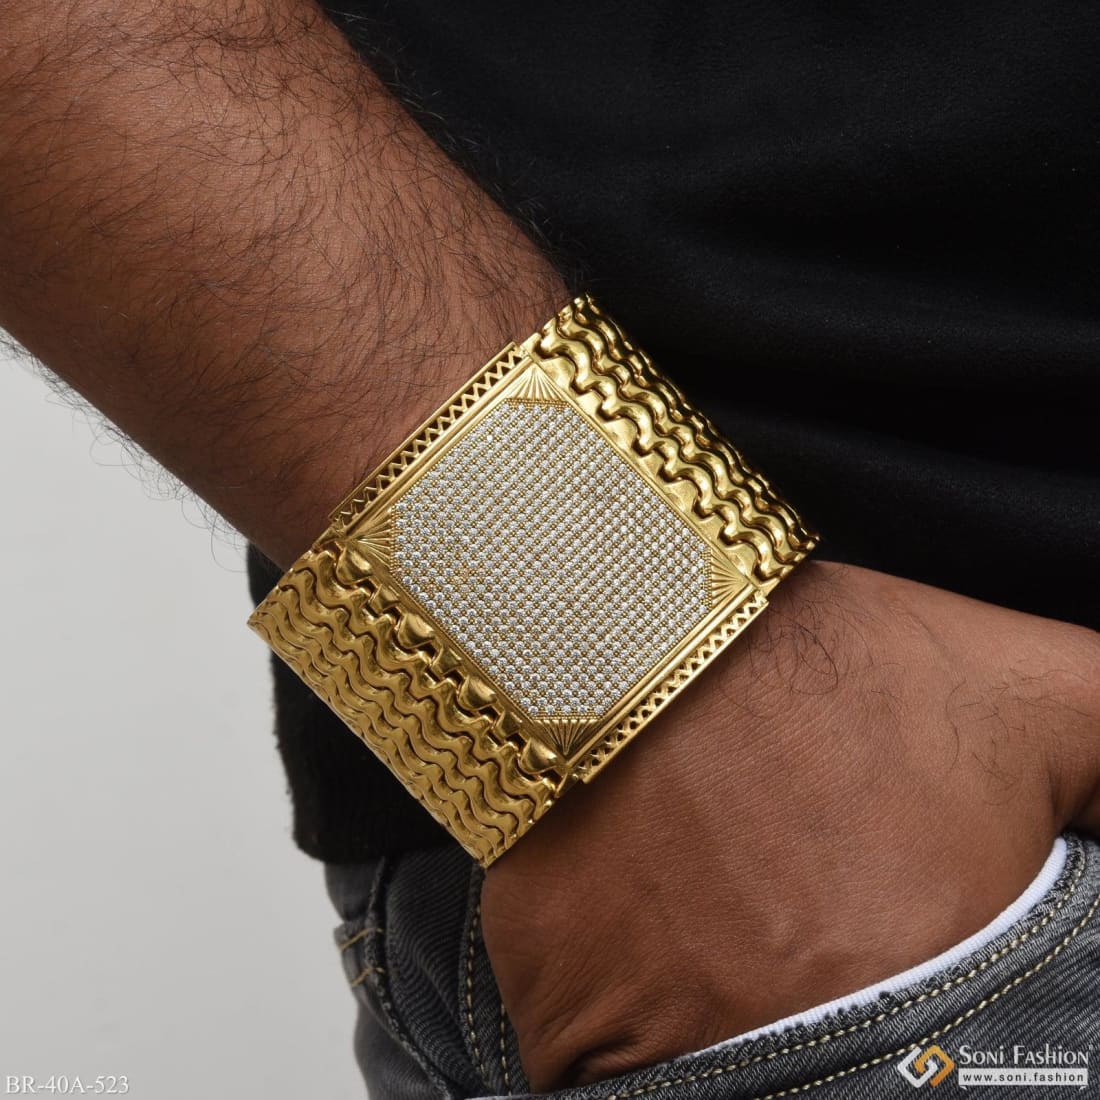 Givenchy: Gold Mini Lock Bracelet | SSENSE